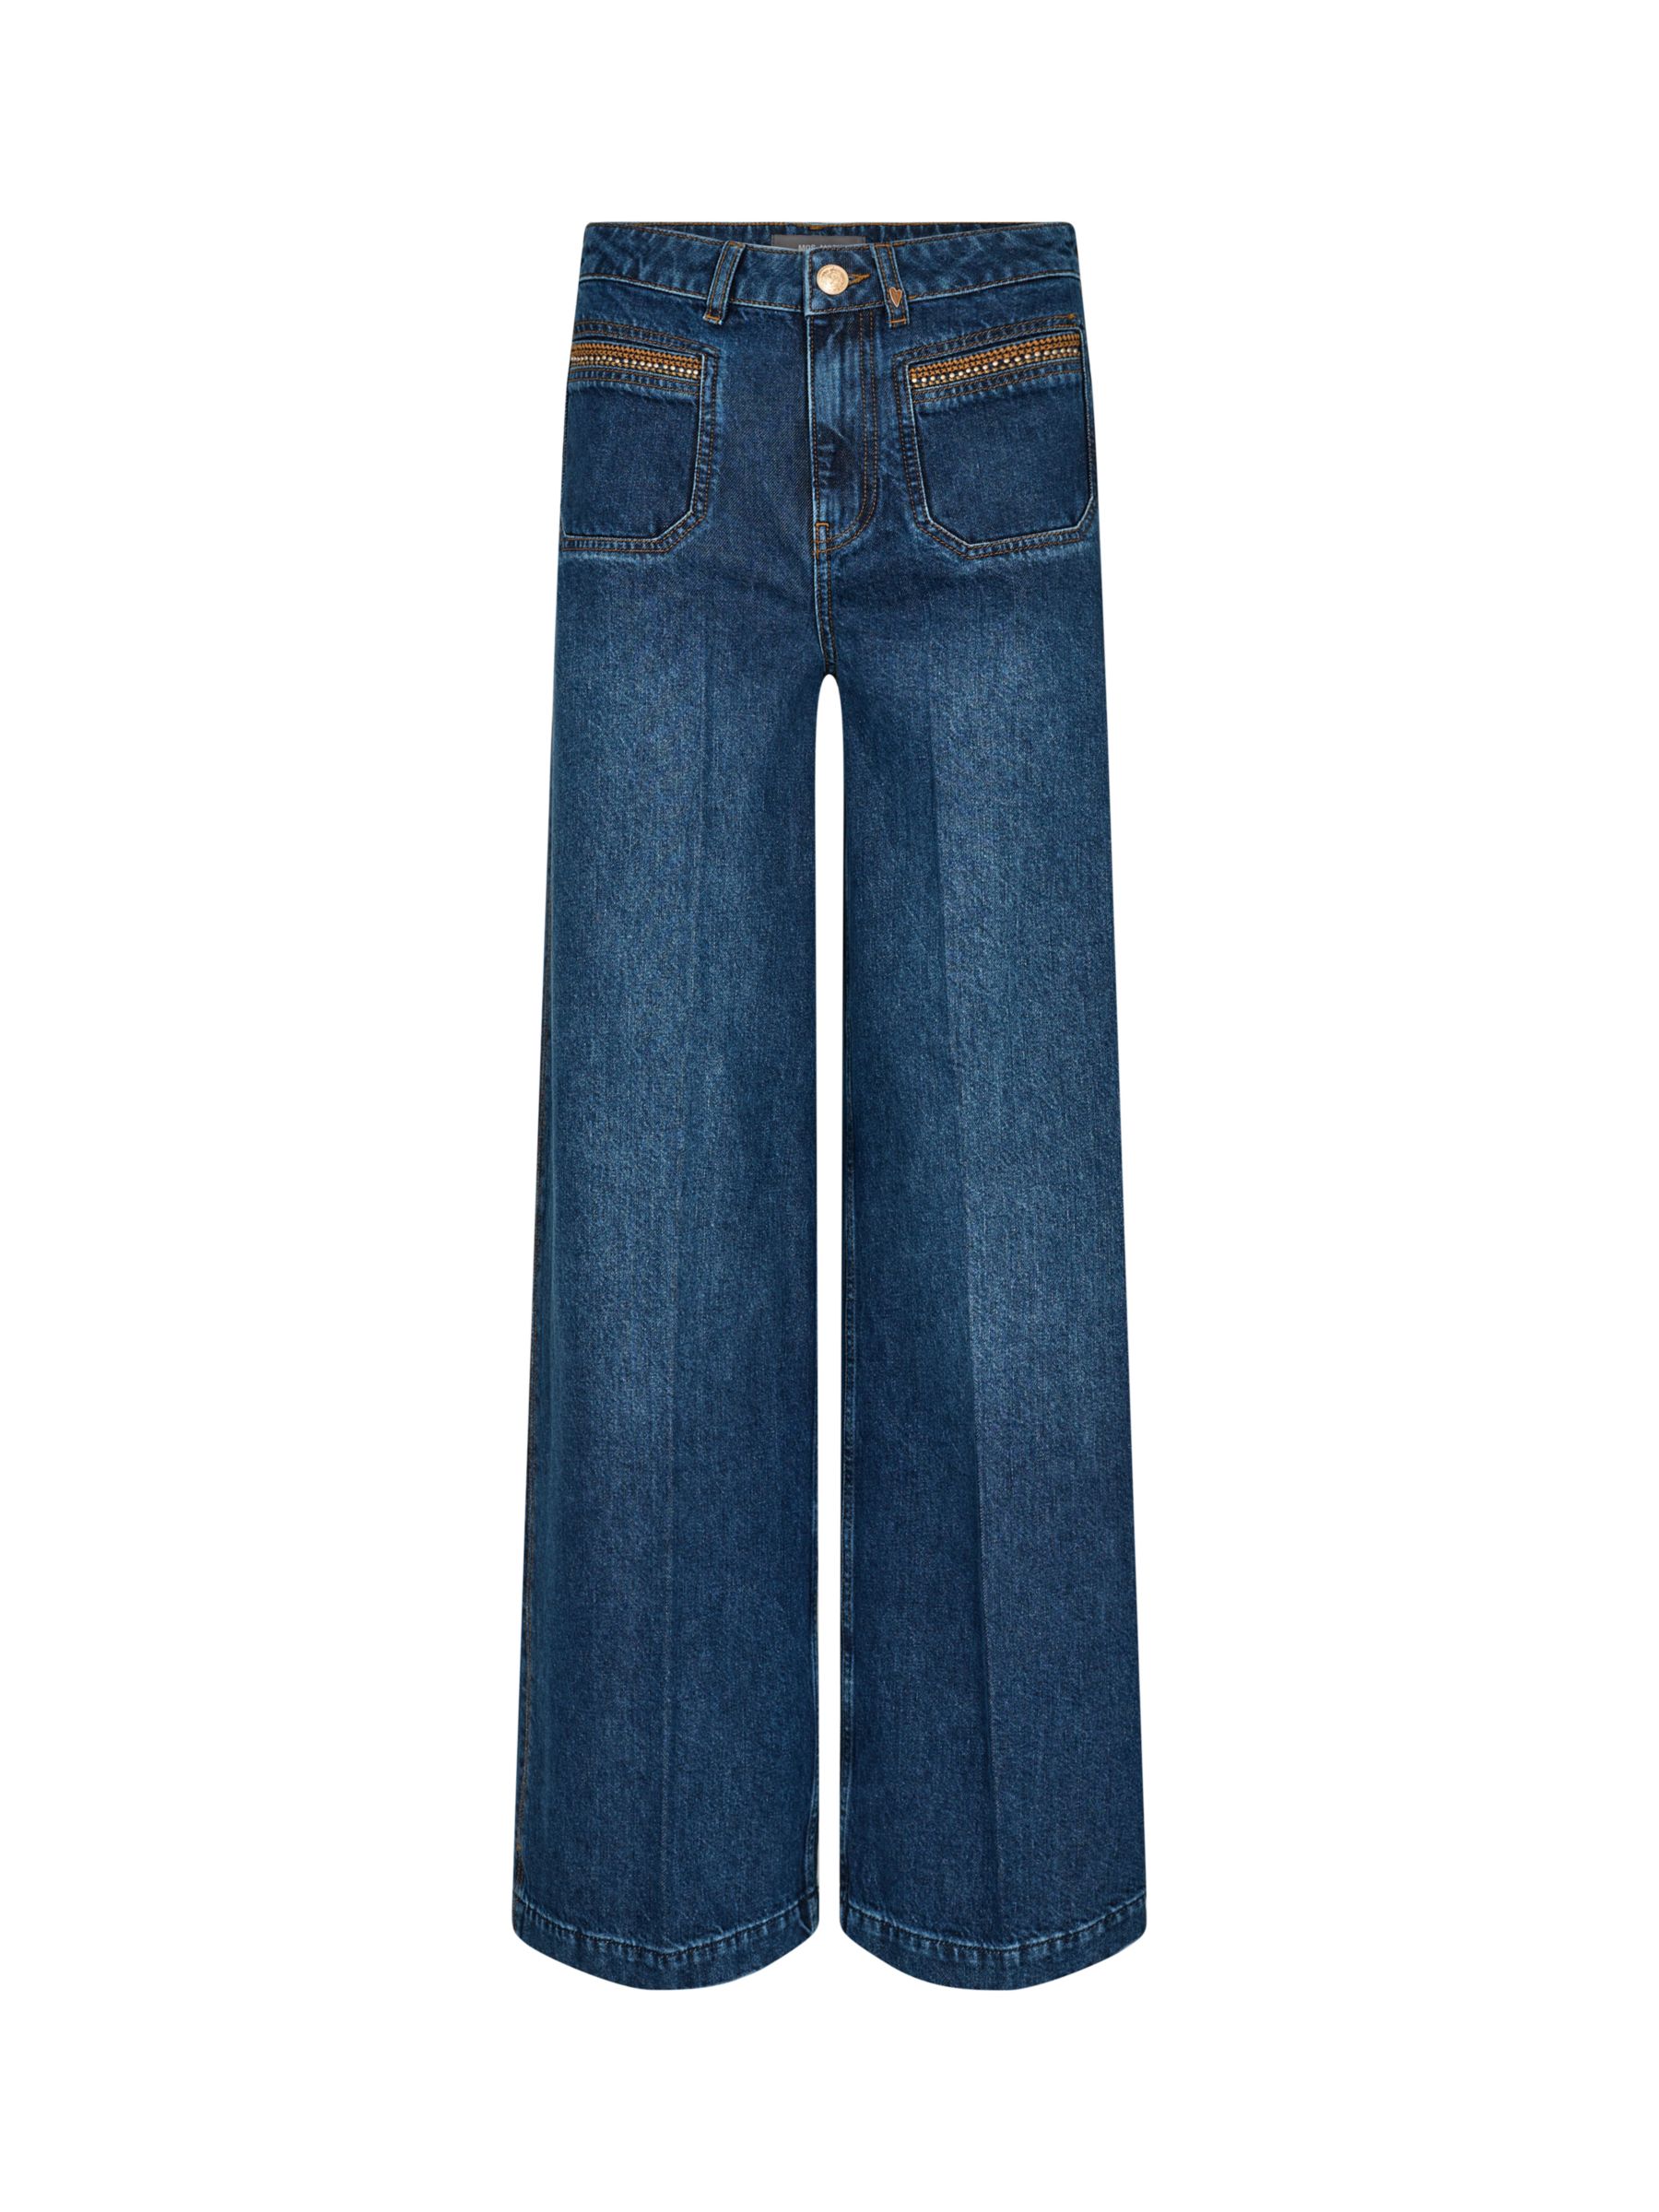 MOS MOSH Colette Sassy High Rise Jeans, Blue, 29R